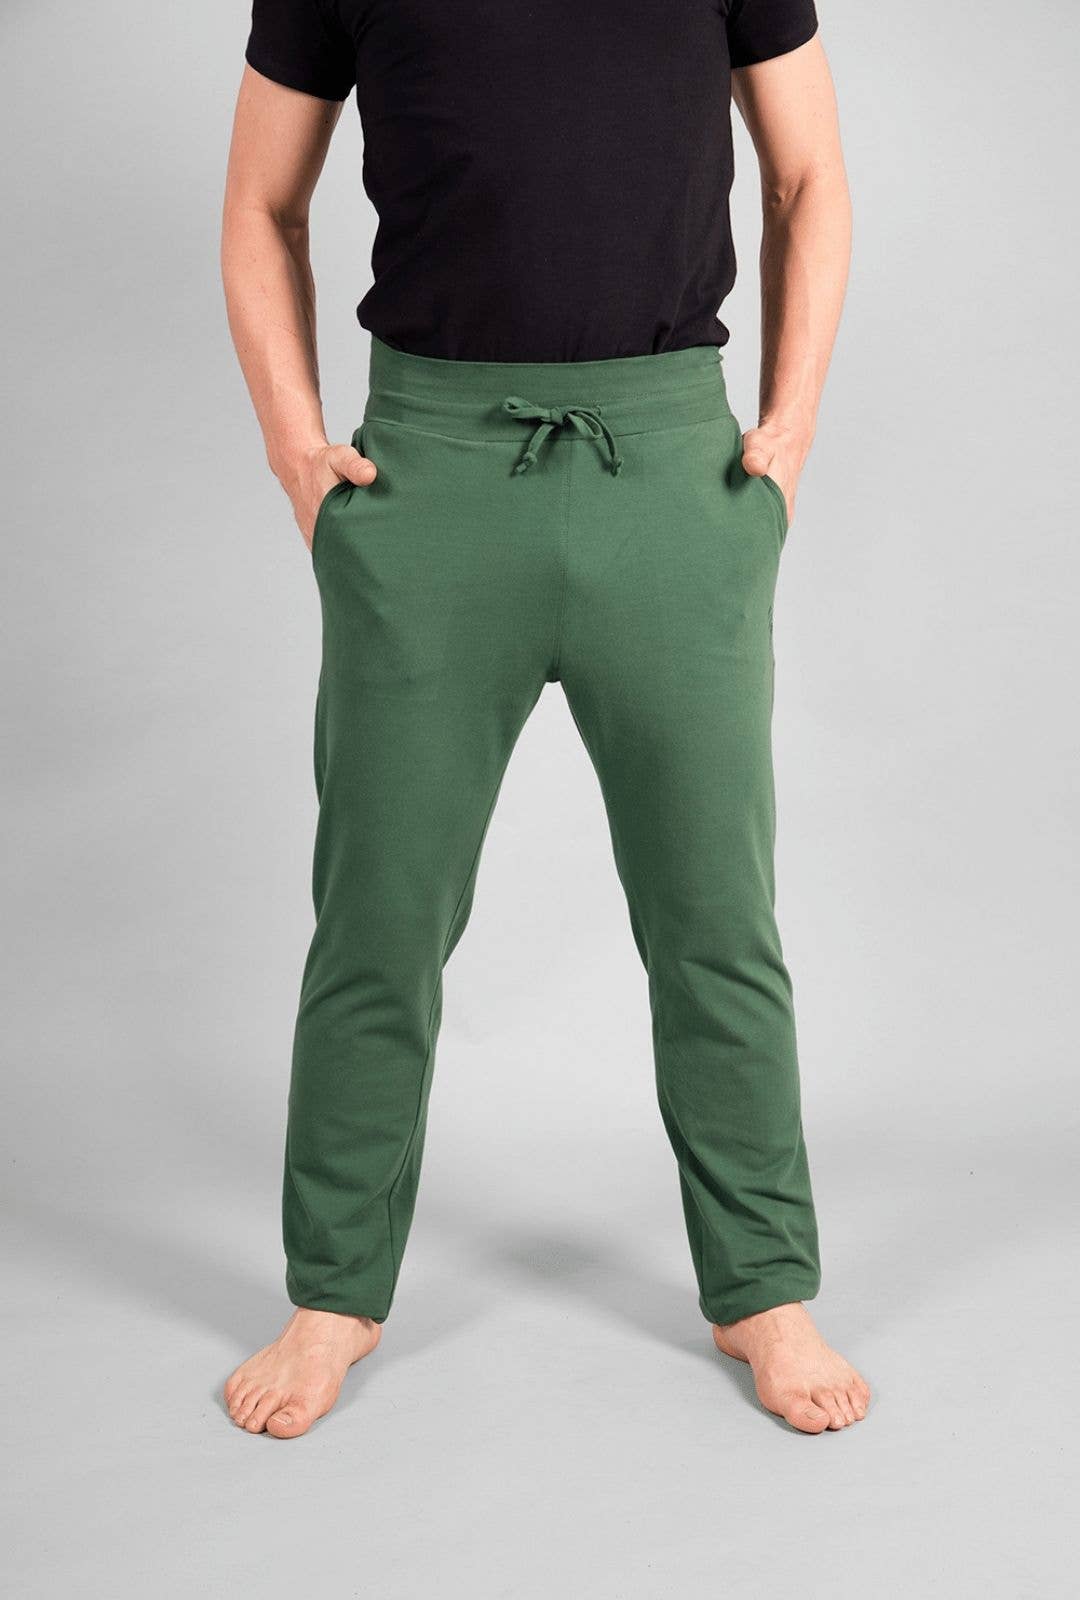 Mahan Men's Yoga Pants - Green Forest